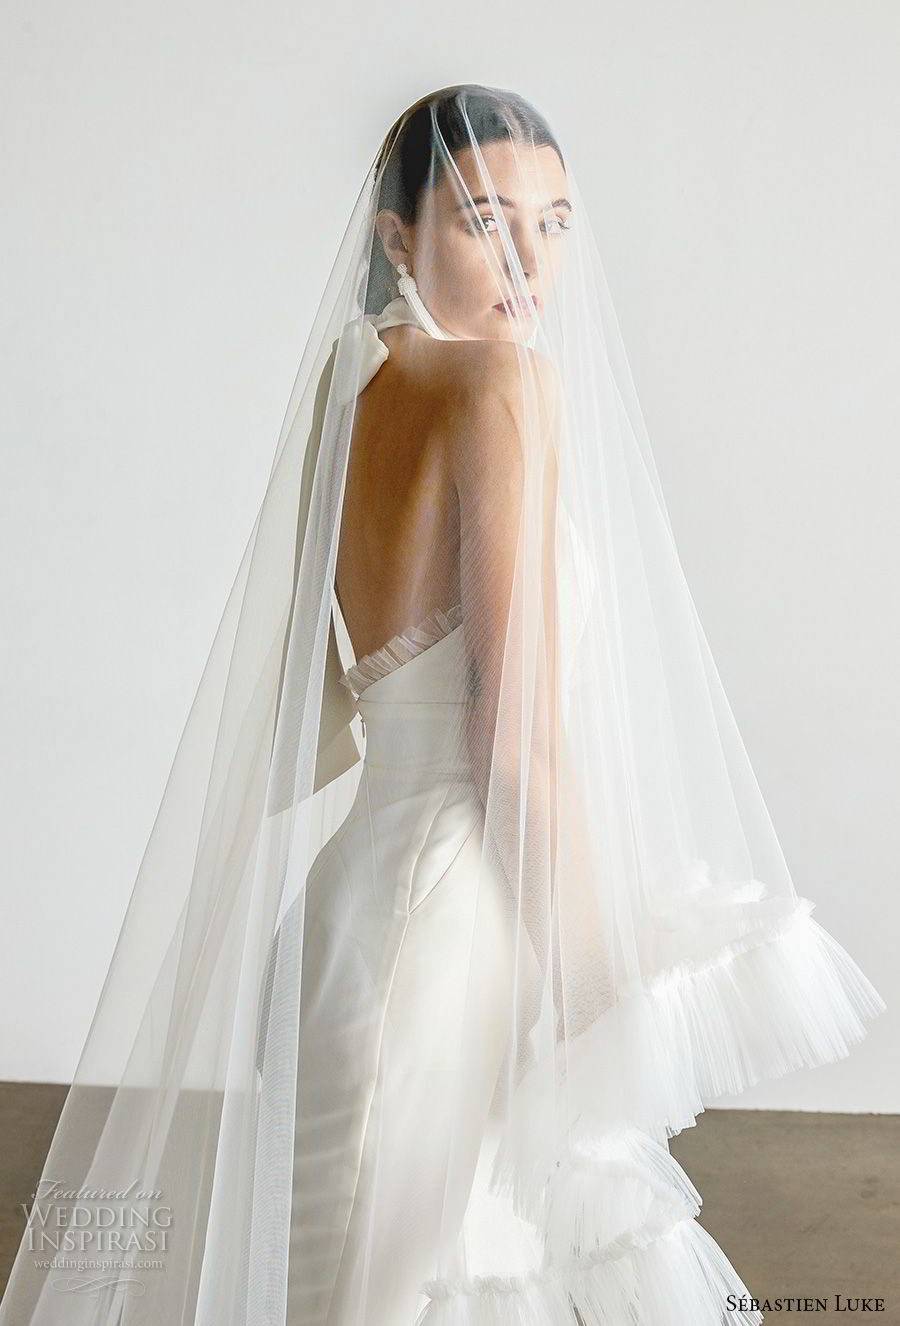 sebastien luke spring 2019 bridal halter high neck simple minimalist modern ankle jumpsuit wedding dress with veil open back chapel train (4) zbv 